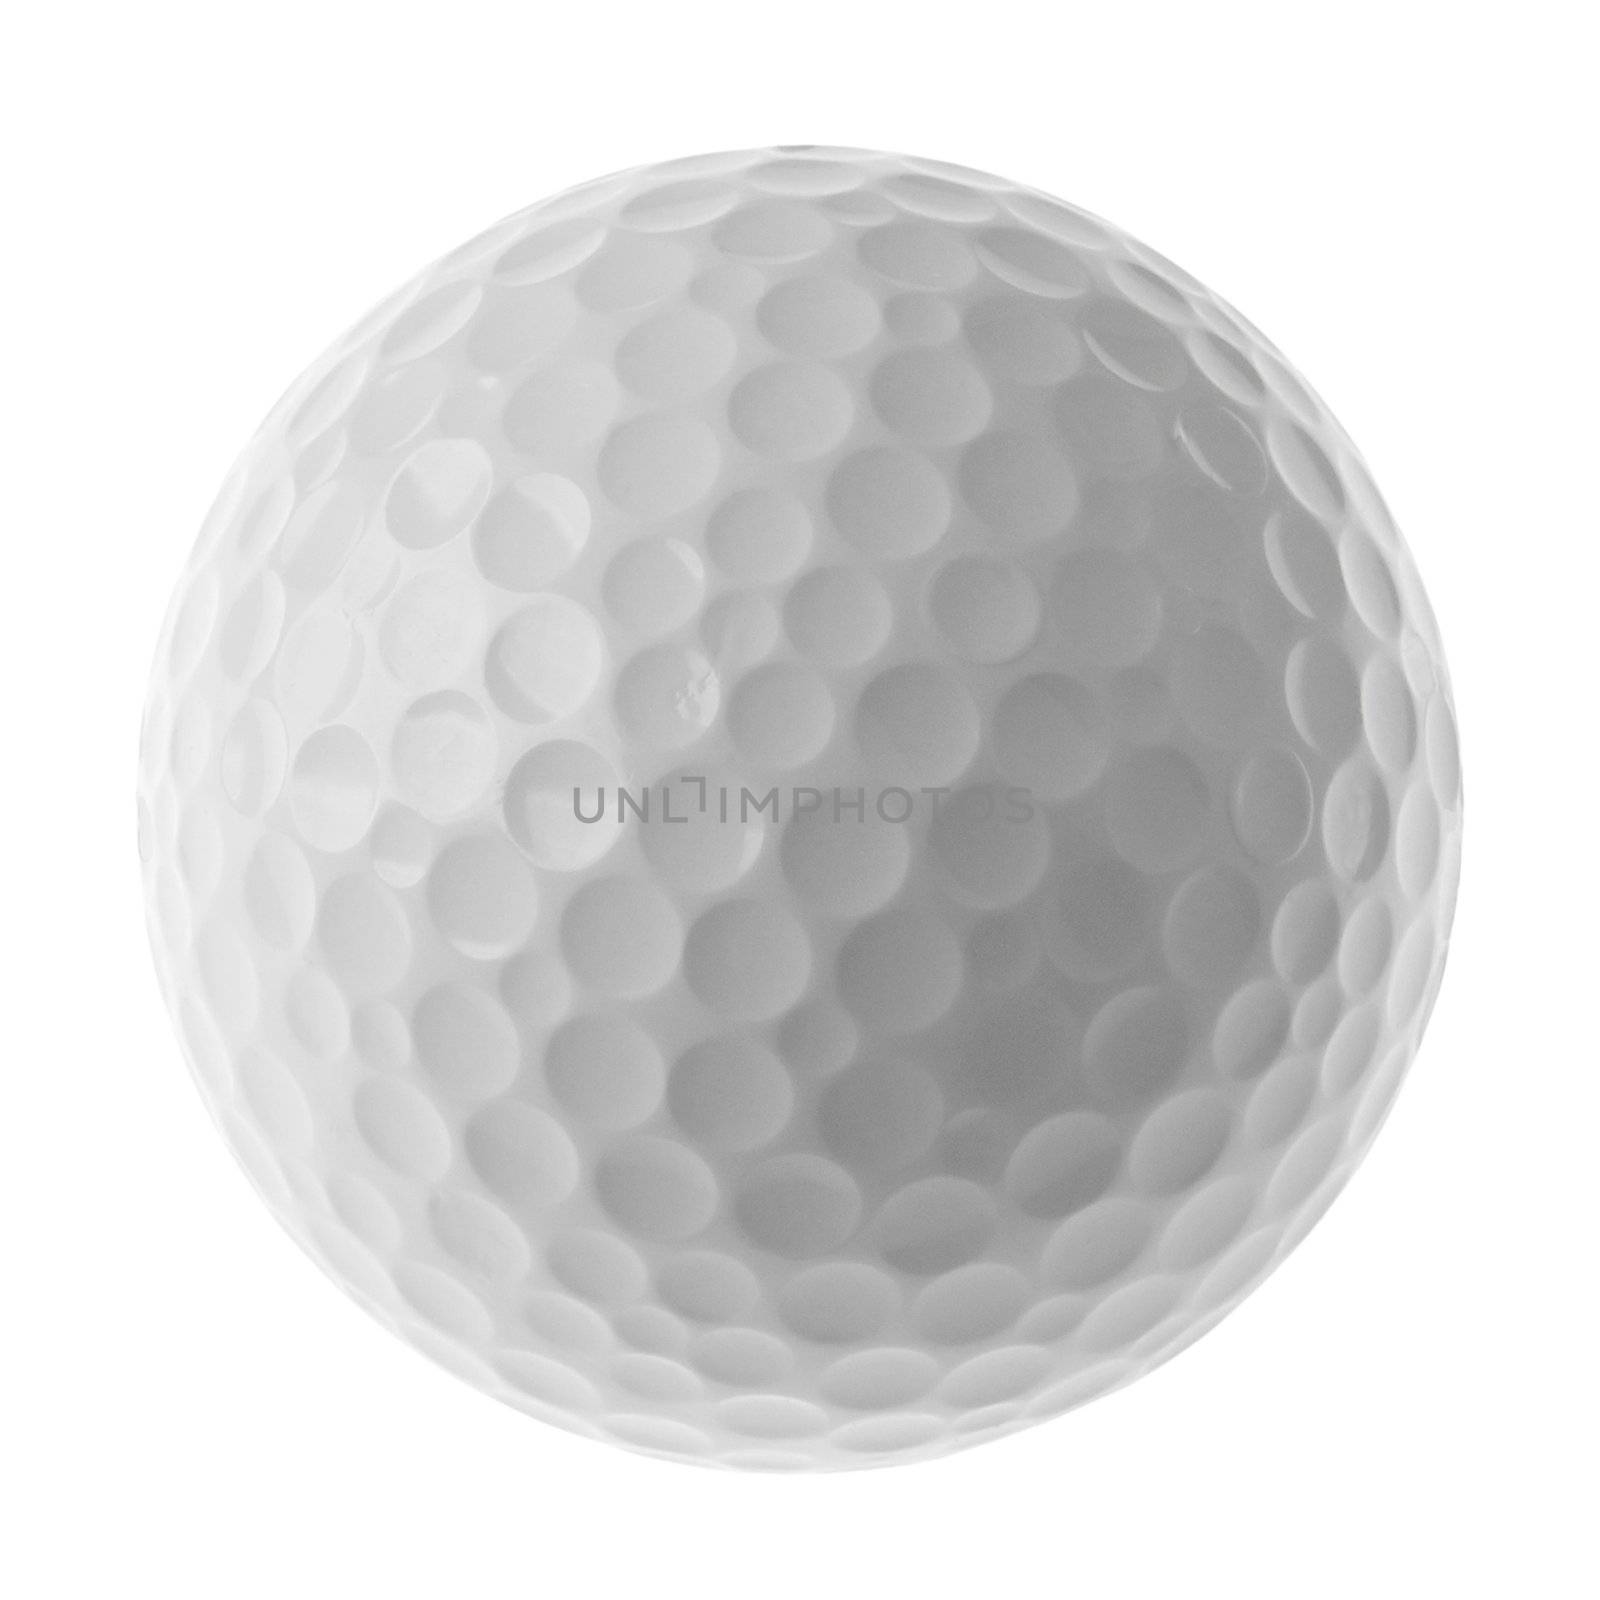 golf ball by antpkr